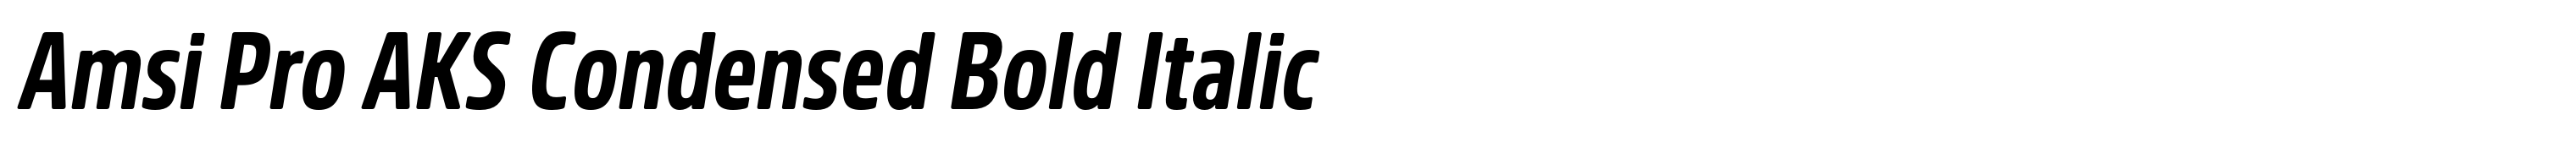 Amsi Pro AKS Condensed Bold Italic